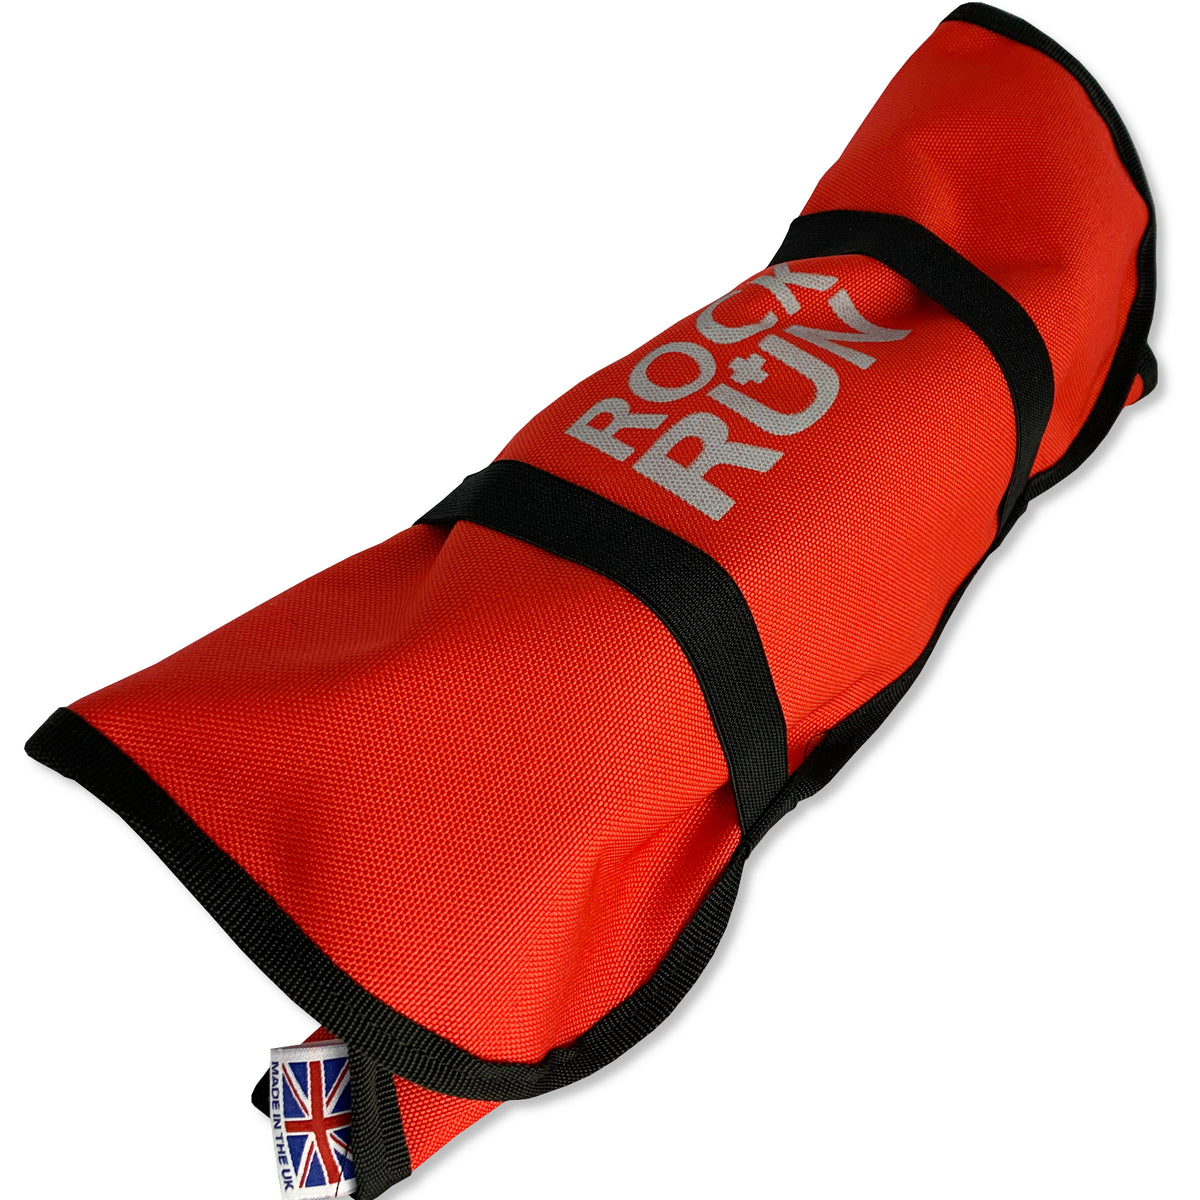 Rock + Run Mini Crampon Bag red